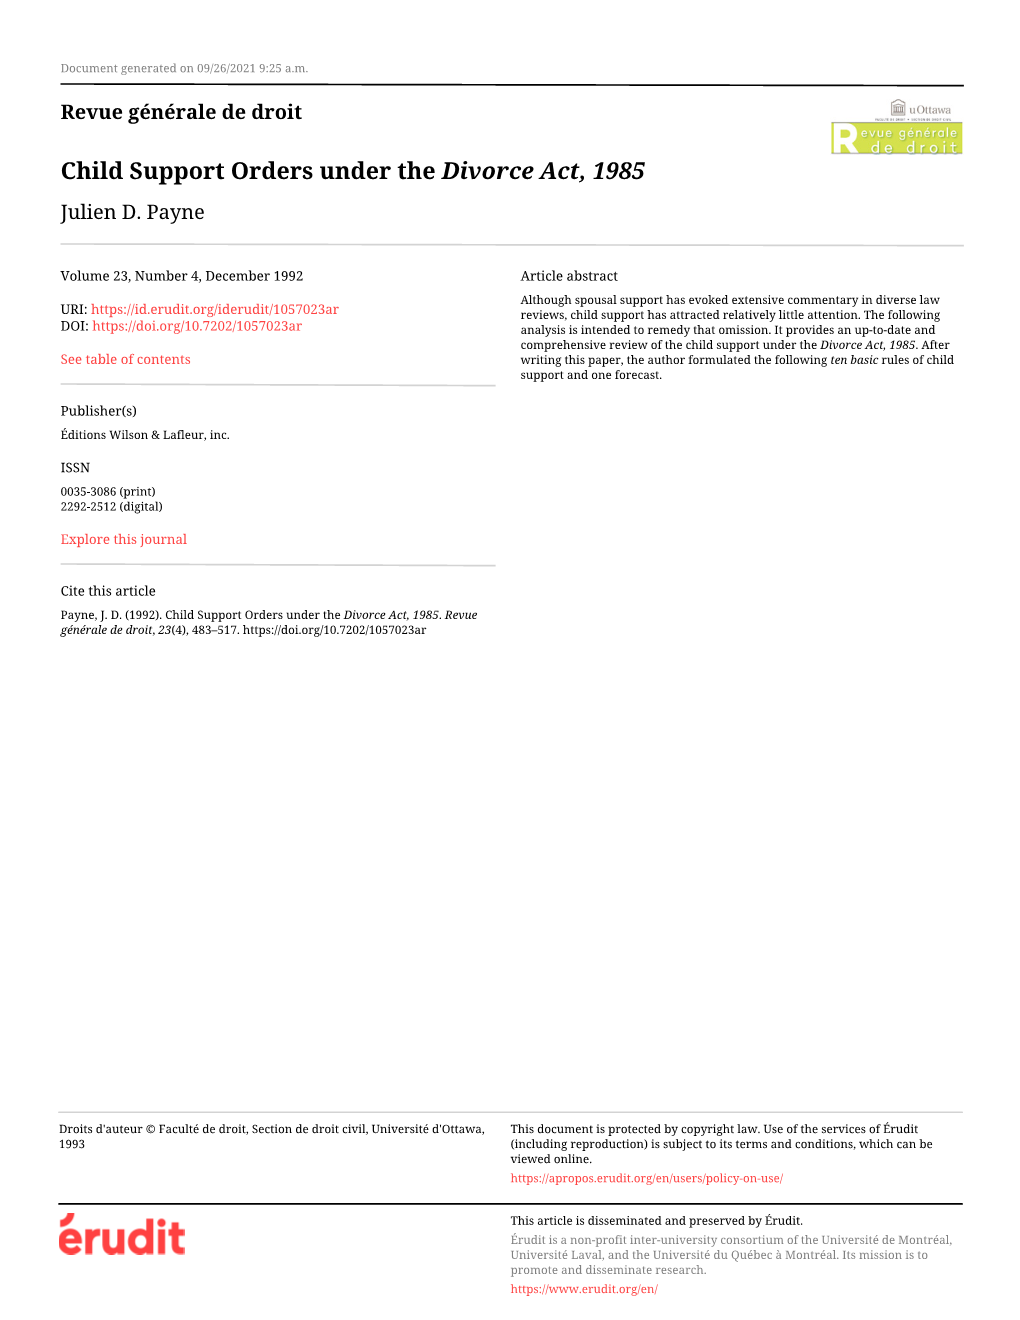 Child Support Orders Under the Divorce Act, 1985 Julien D